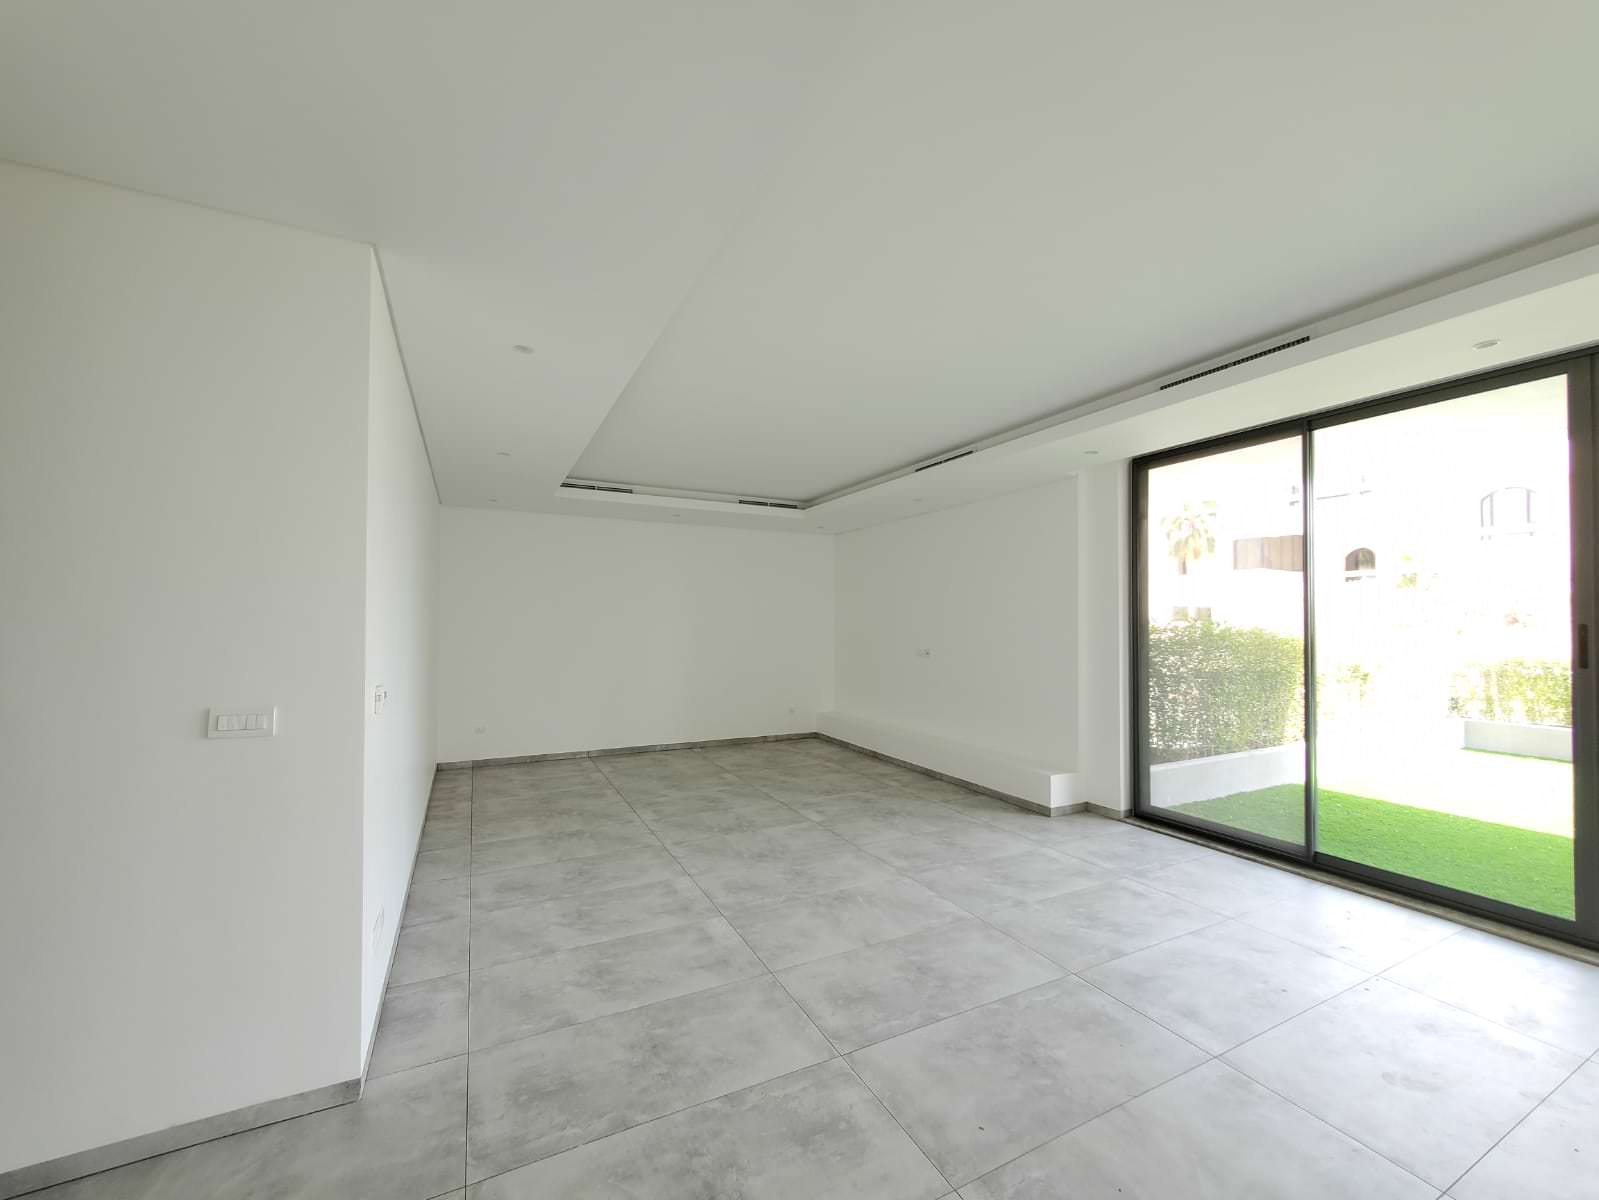 Salwa – brand new, three bedroom ground floor w/yard and terrace